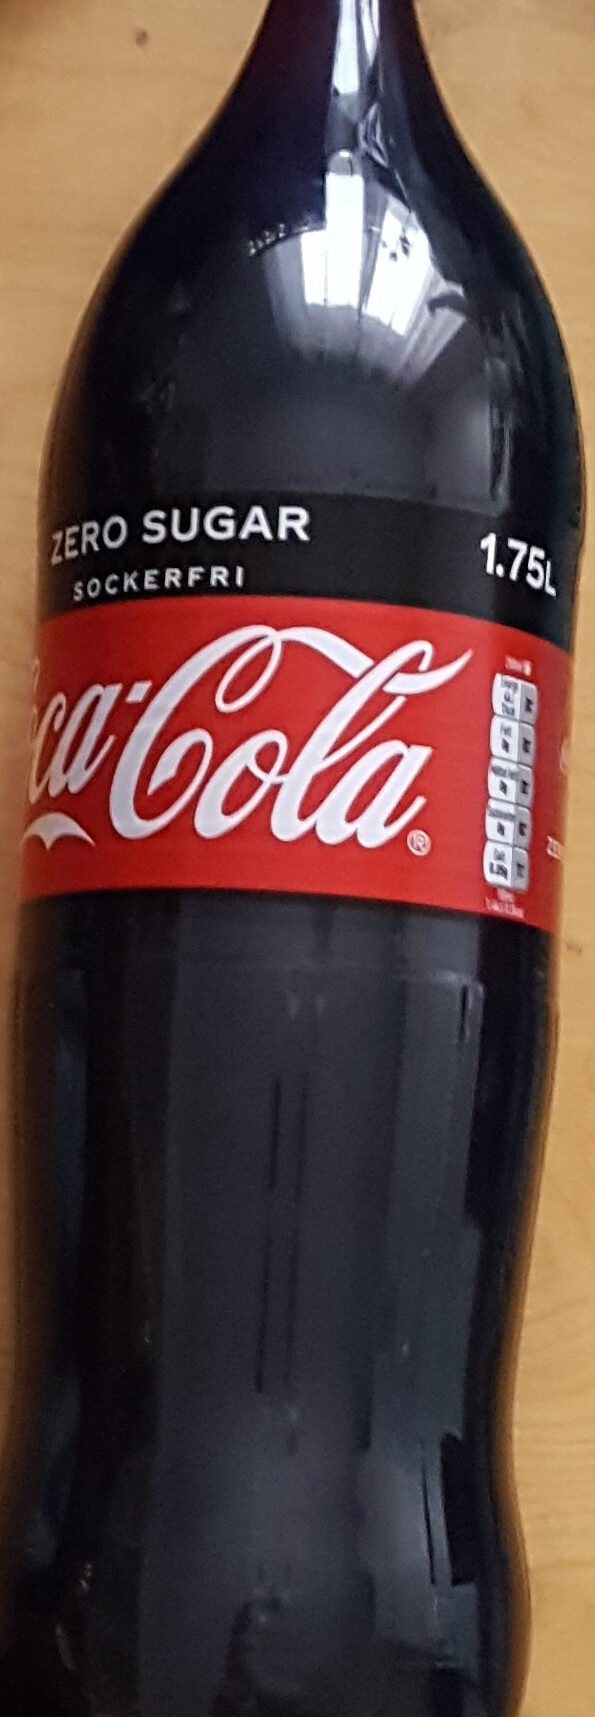 Coca-Cola Zero Sugar - Sockerfri - Product - sv